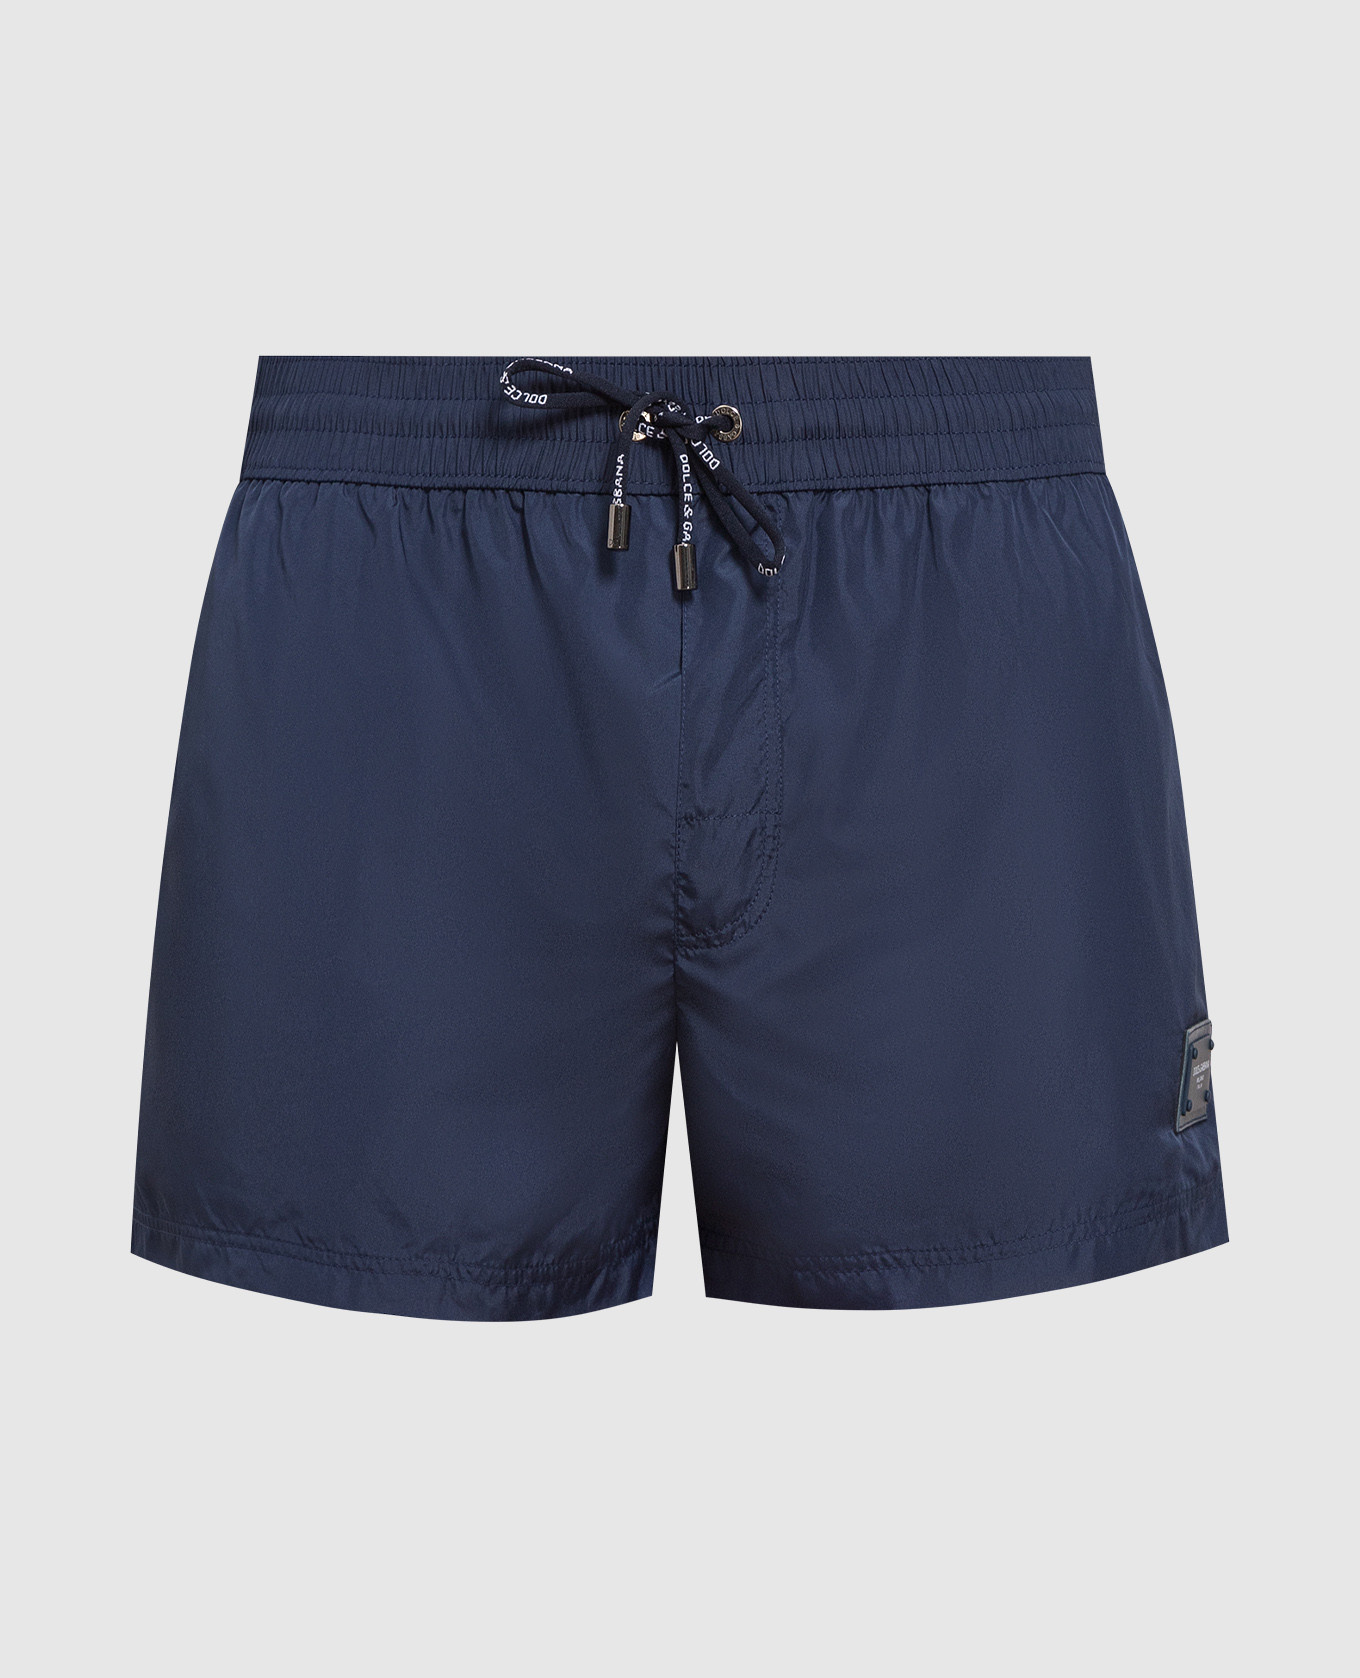 Blue swim shorts with logo patch